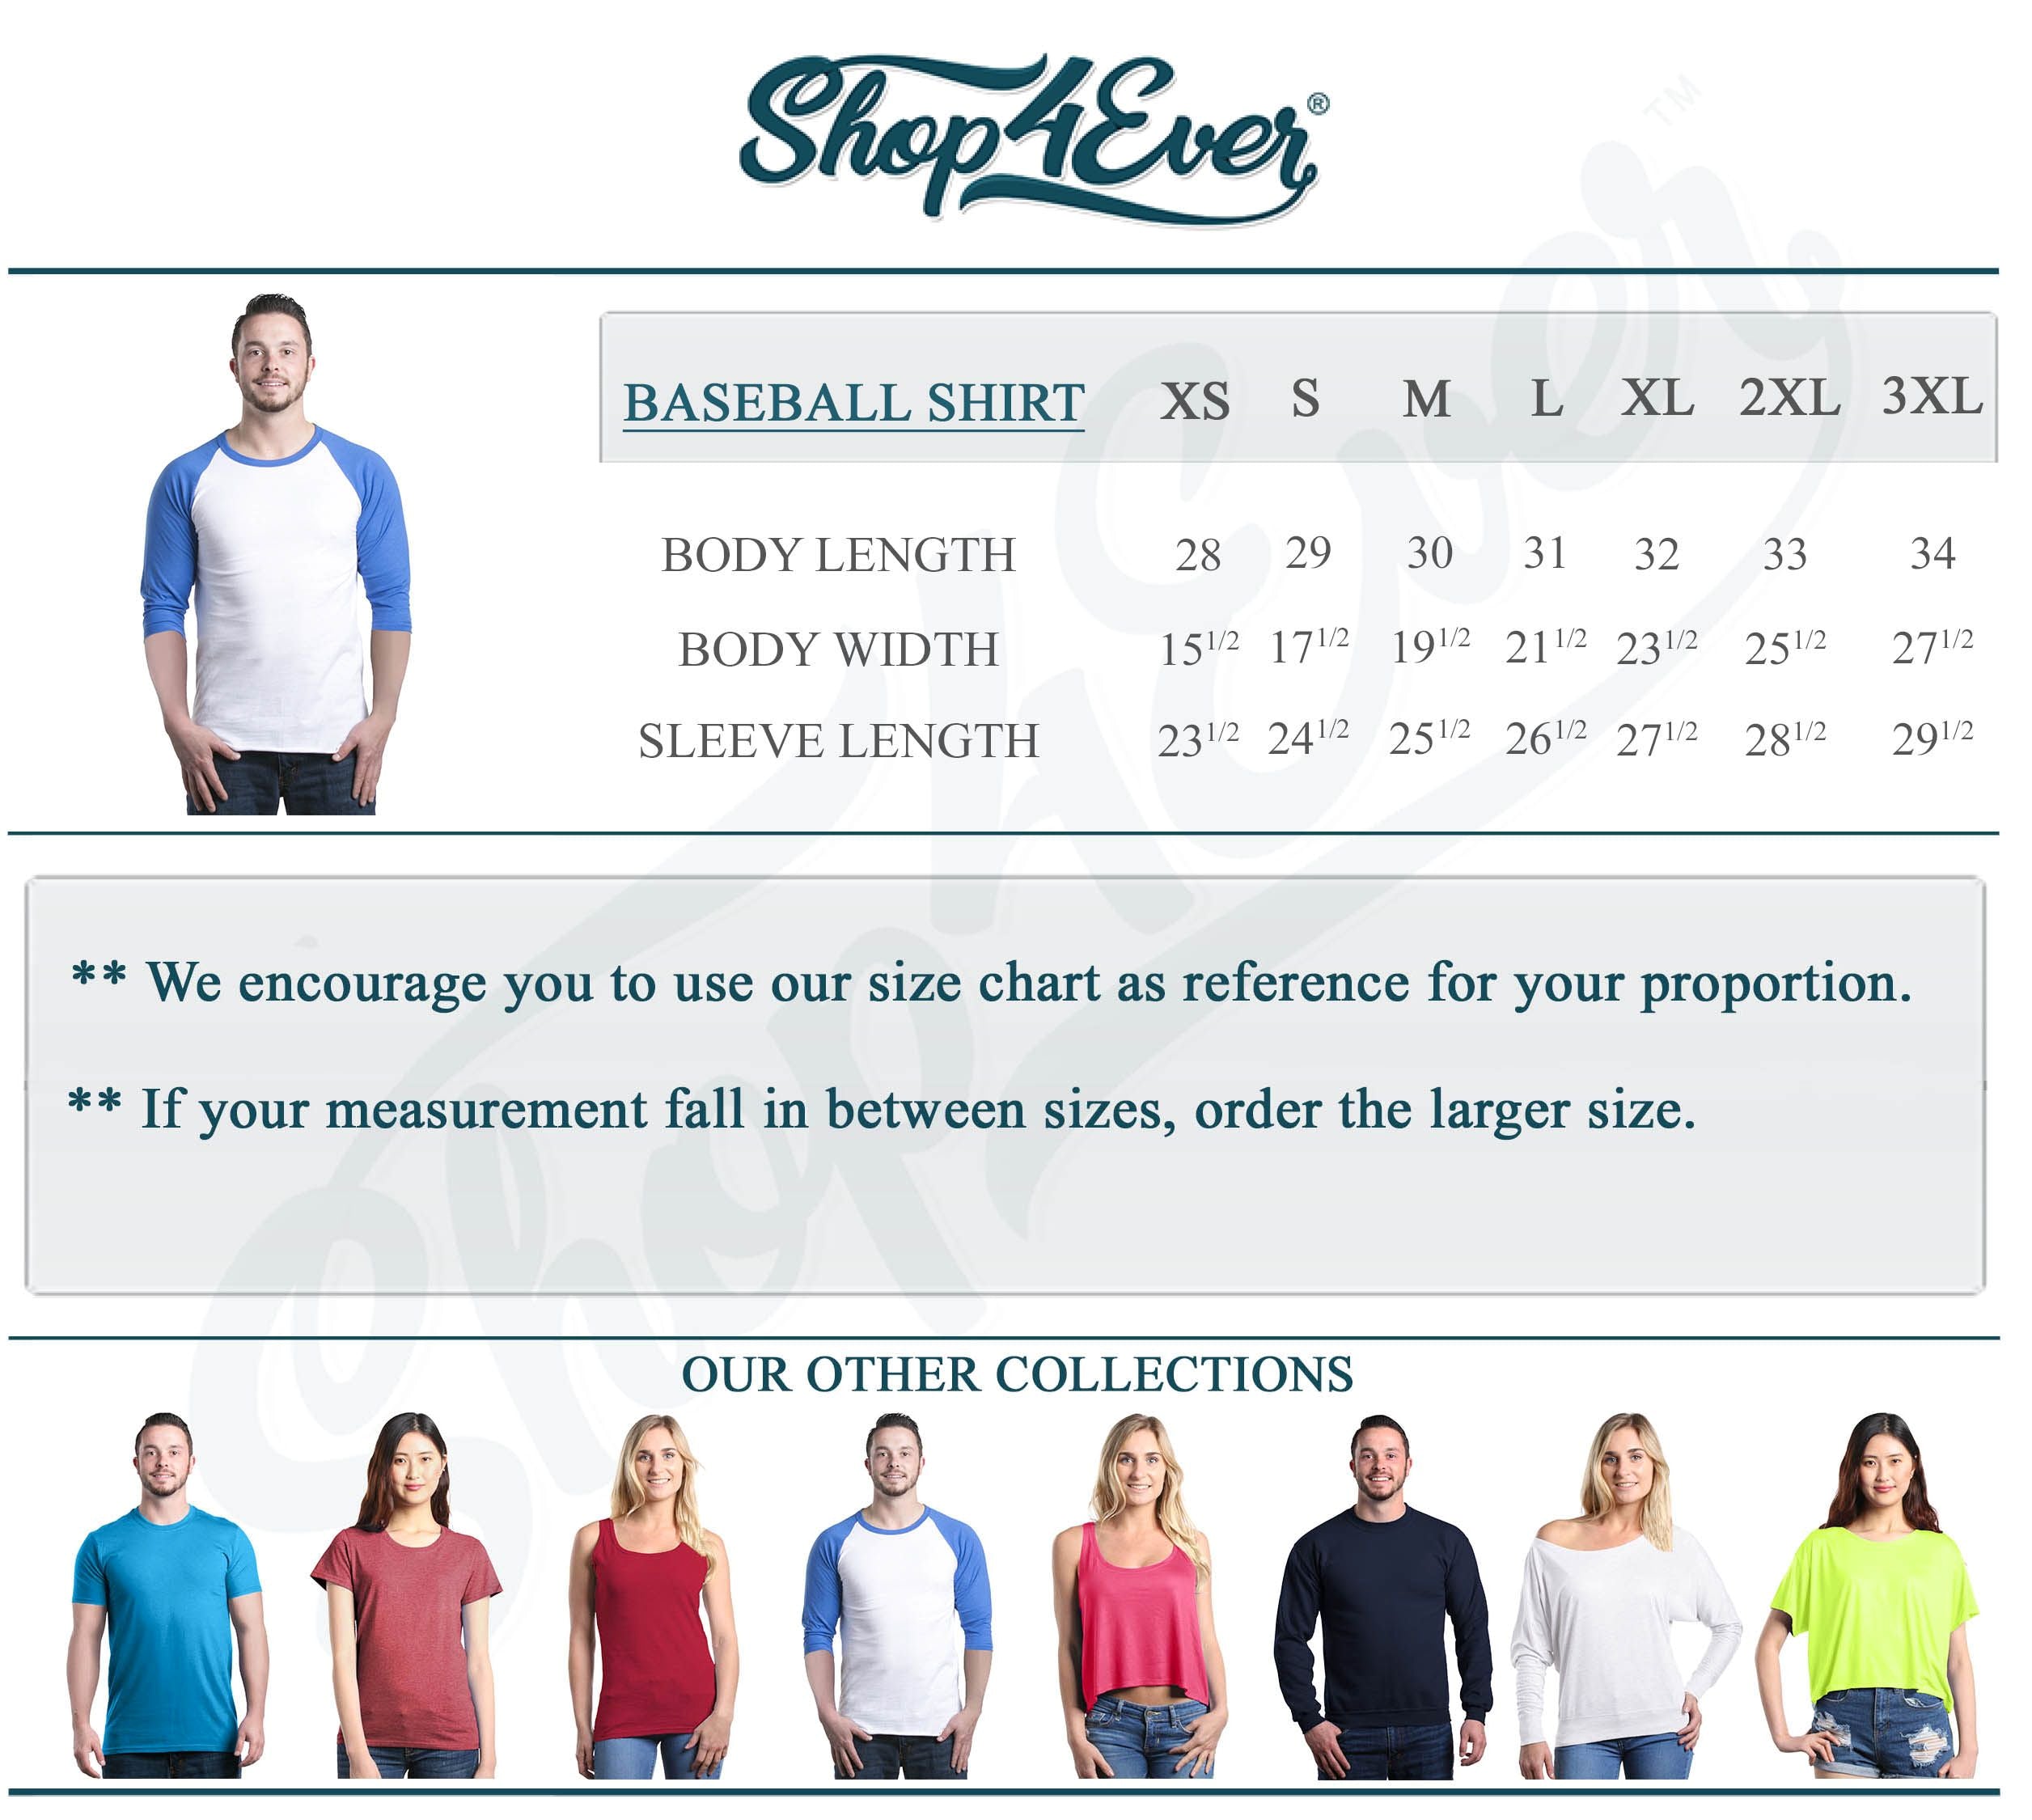 California State White Bear Raglan Baseball Shirt